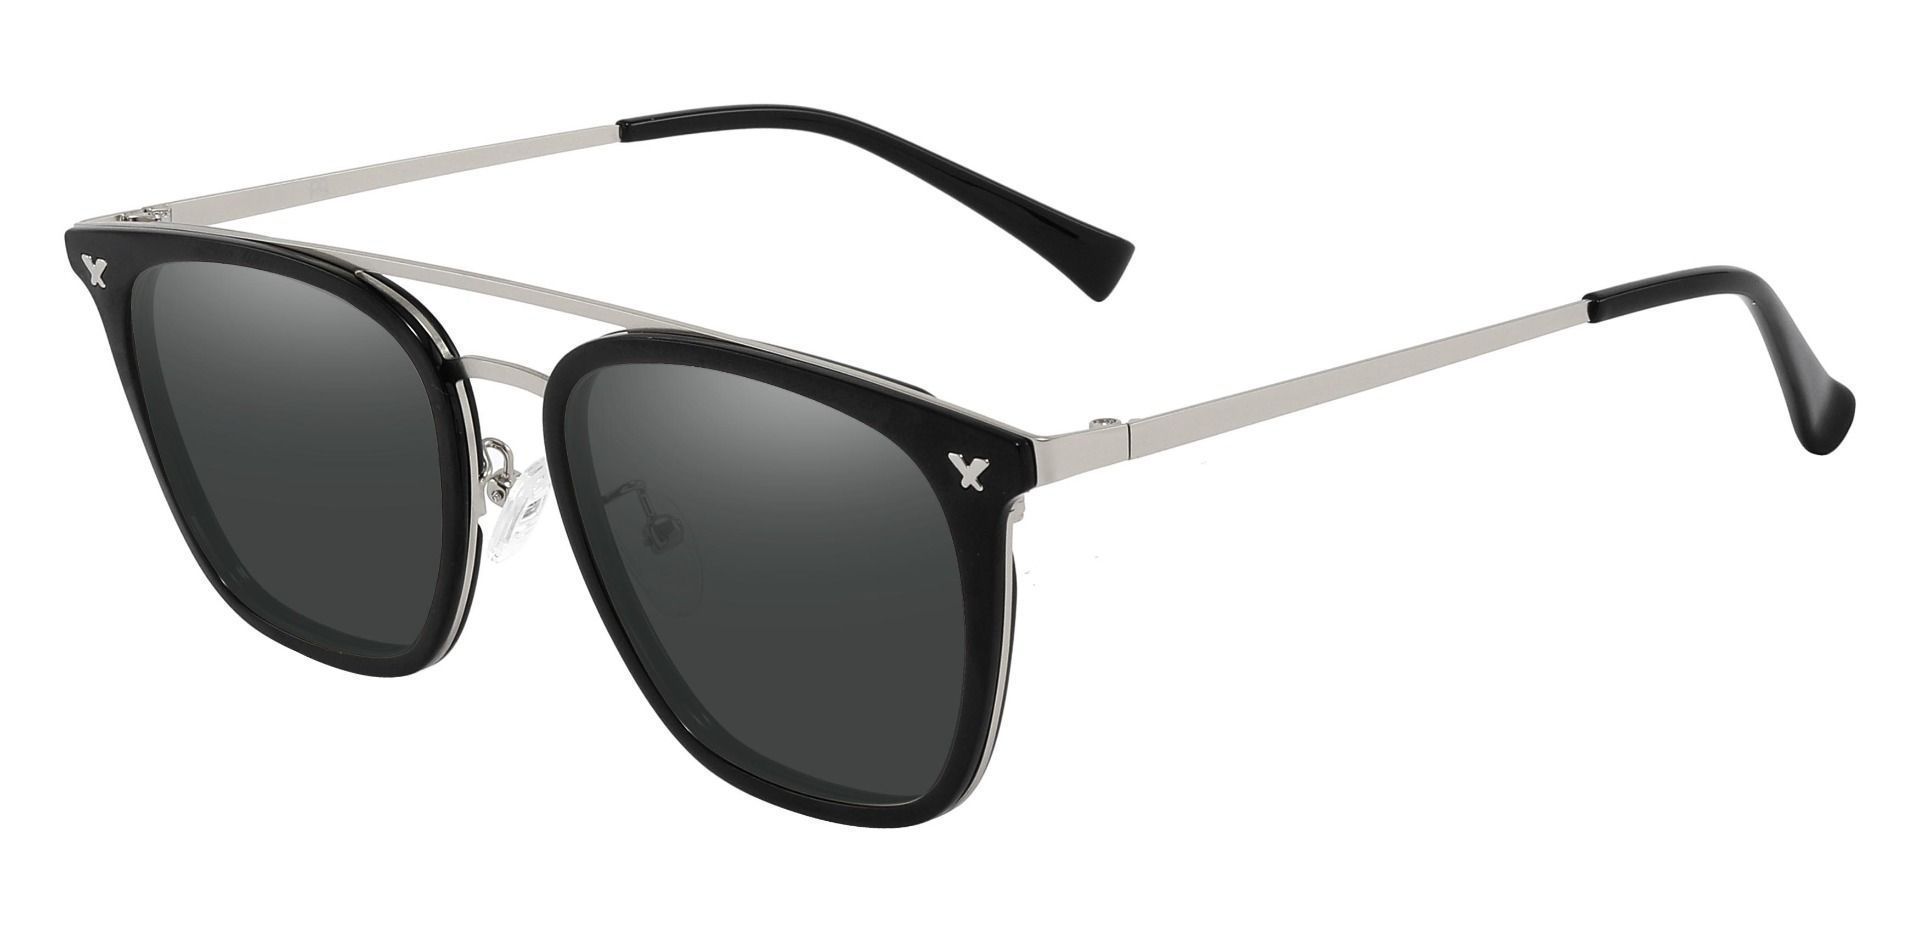 Francois Aviator Prescription Sunglasses - Black Frame With Gray Lenses